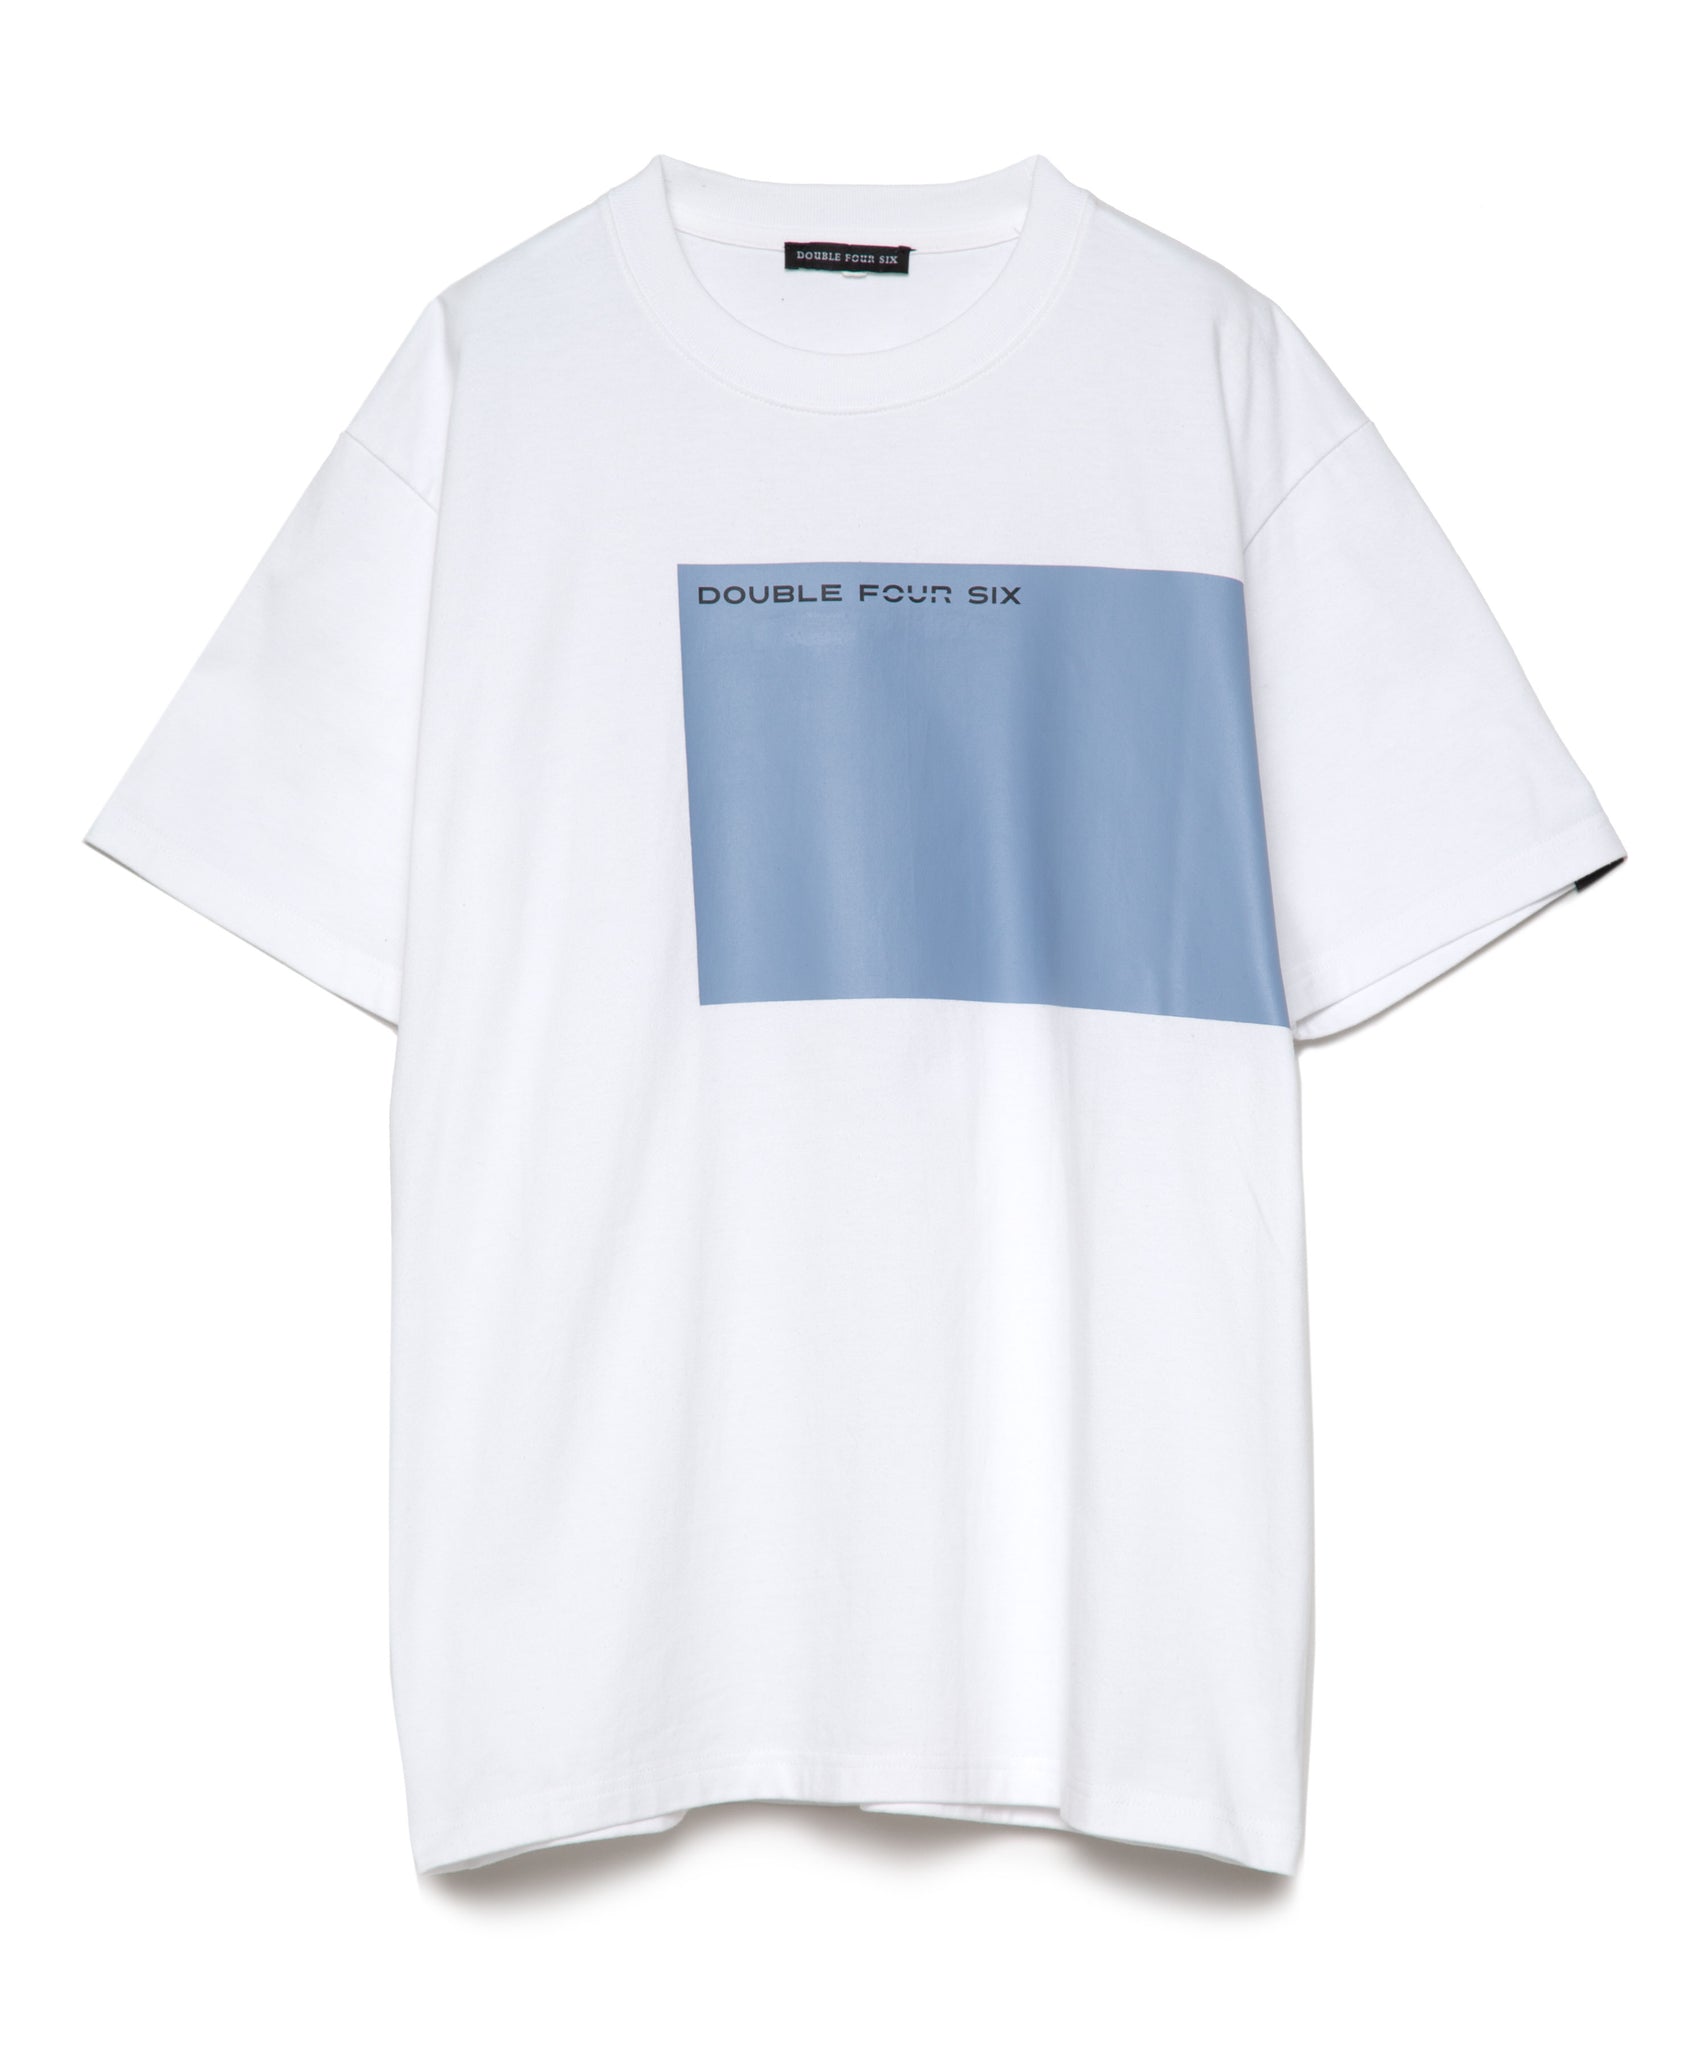 DOUBLE FOUR SIX- Message Print T-shirt White – 446 - DOUBLE FOUR SIX -